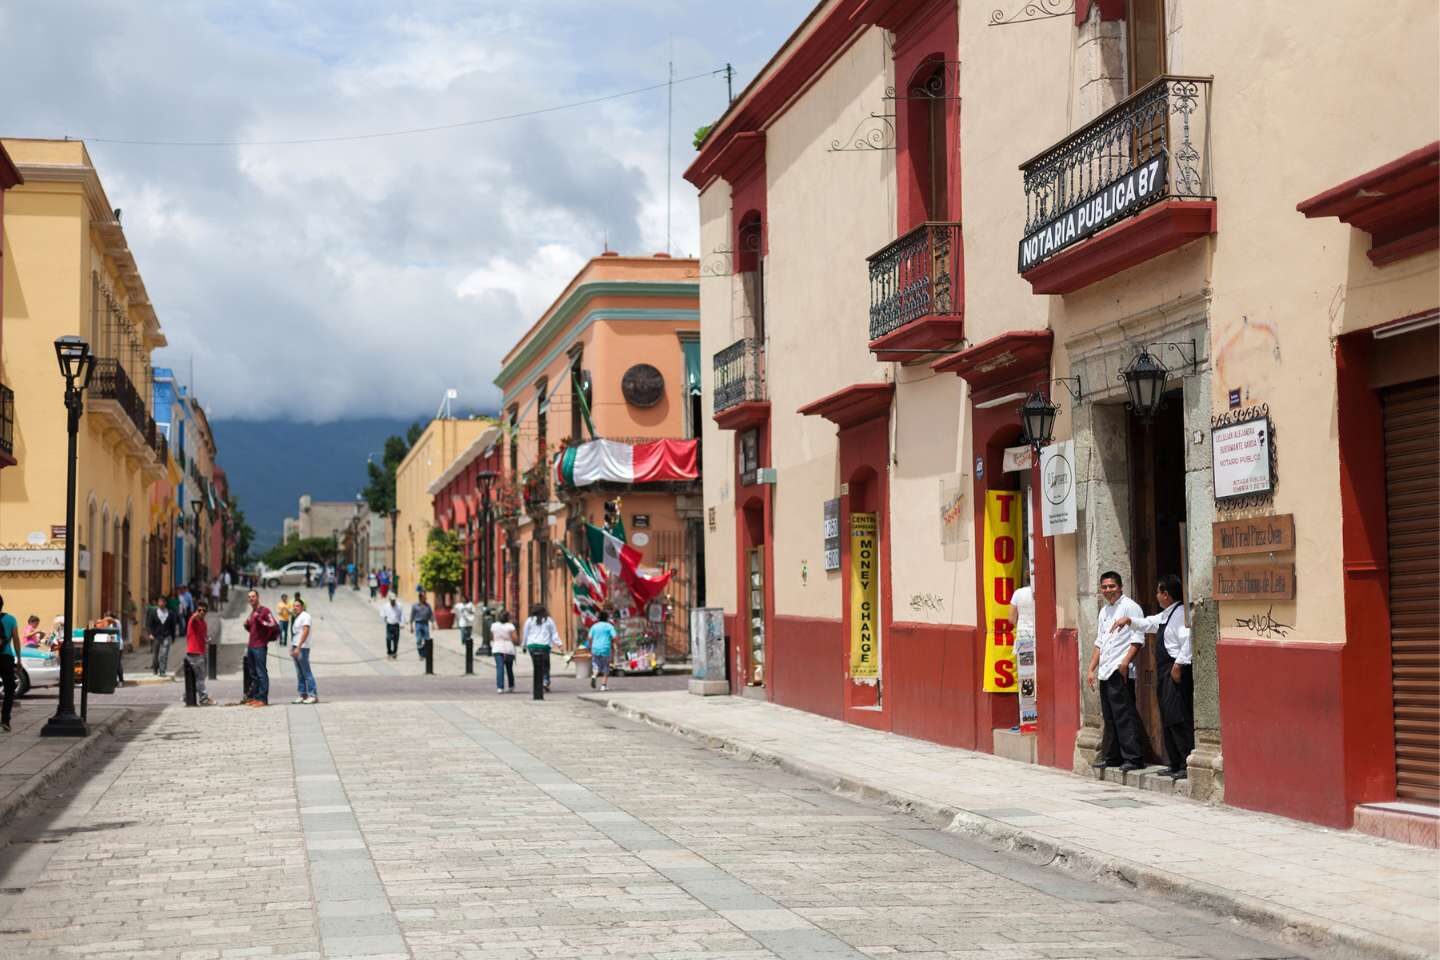 Tourist spots in Oaxaca, Mexico